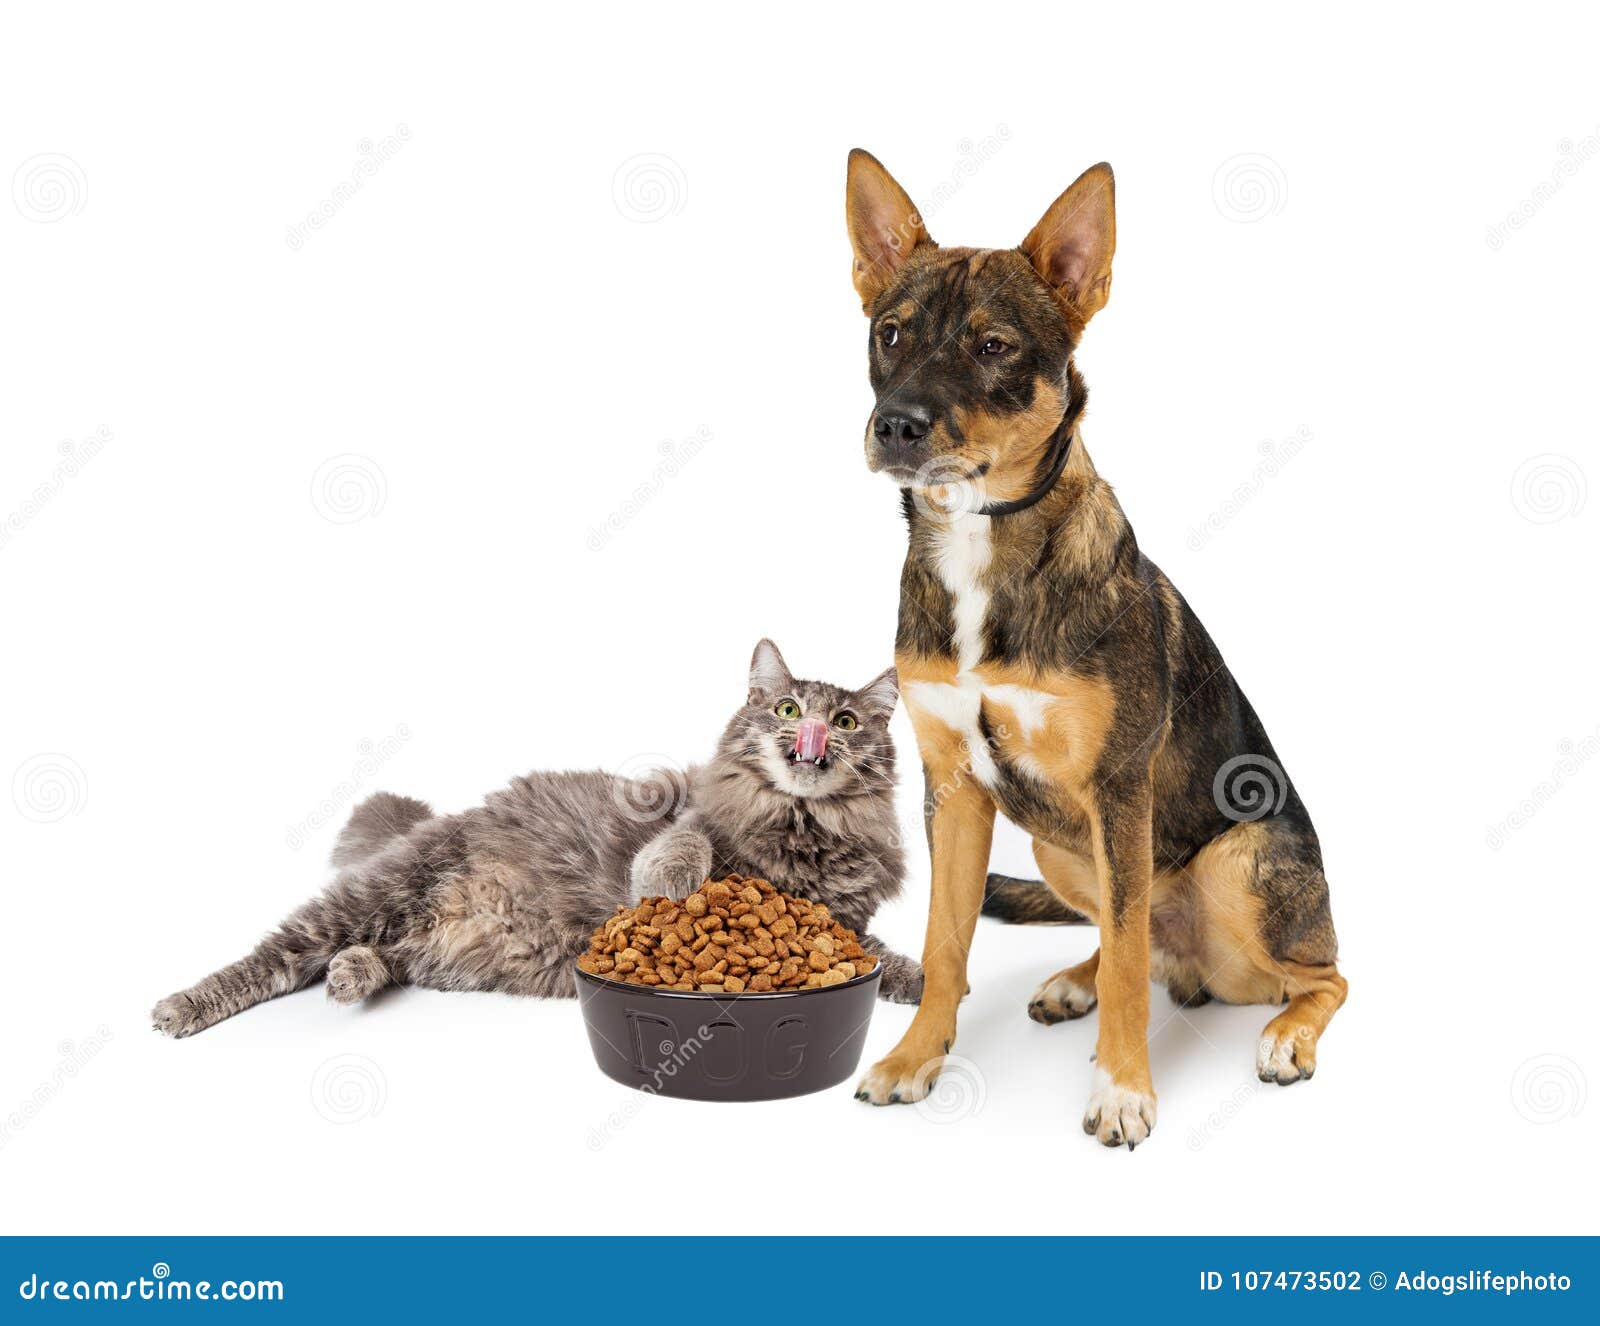 Cat Eating Angry Dogs Food stock photo. Image of shepherd